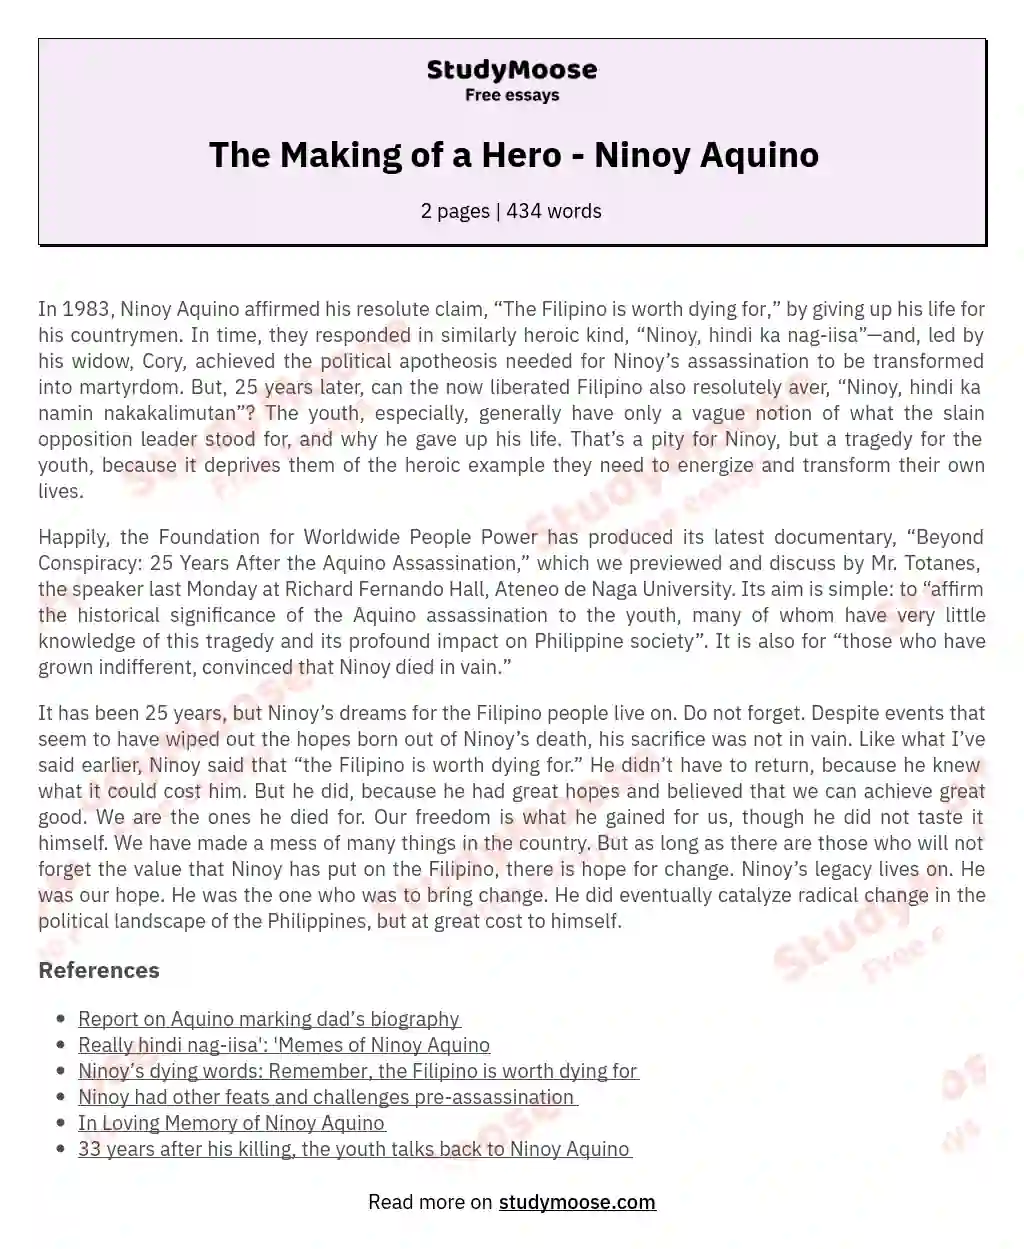 The Making of a Hero - Ninoy Aquino essay